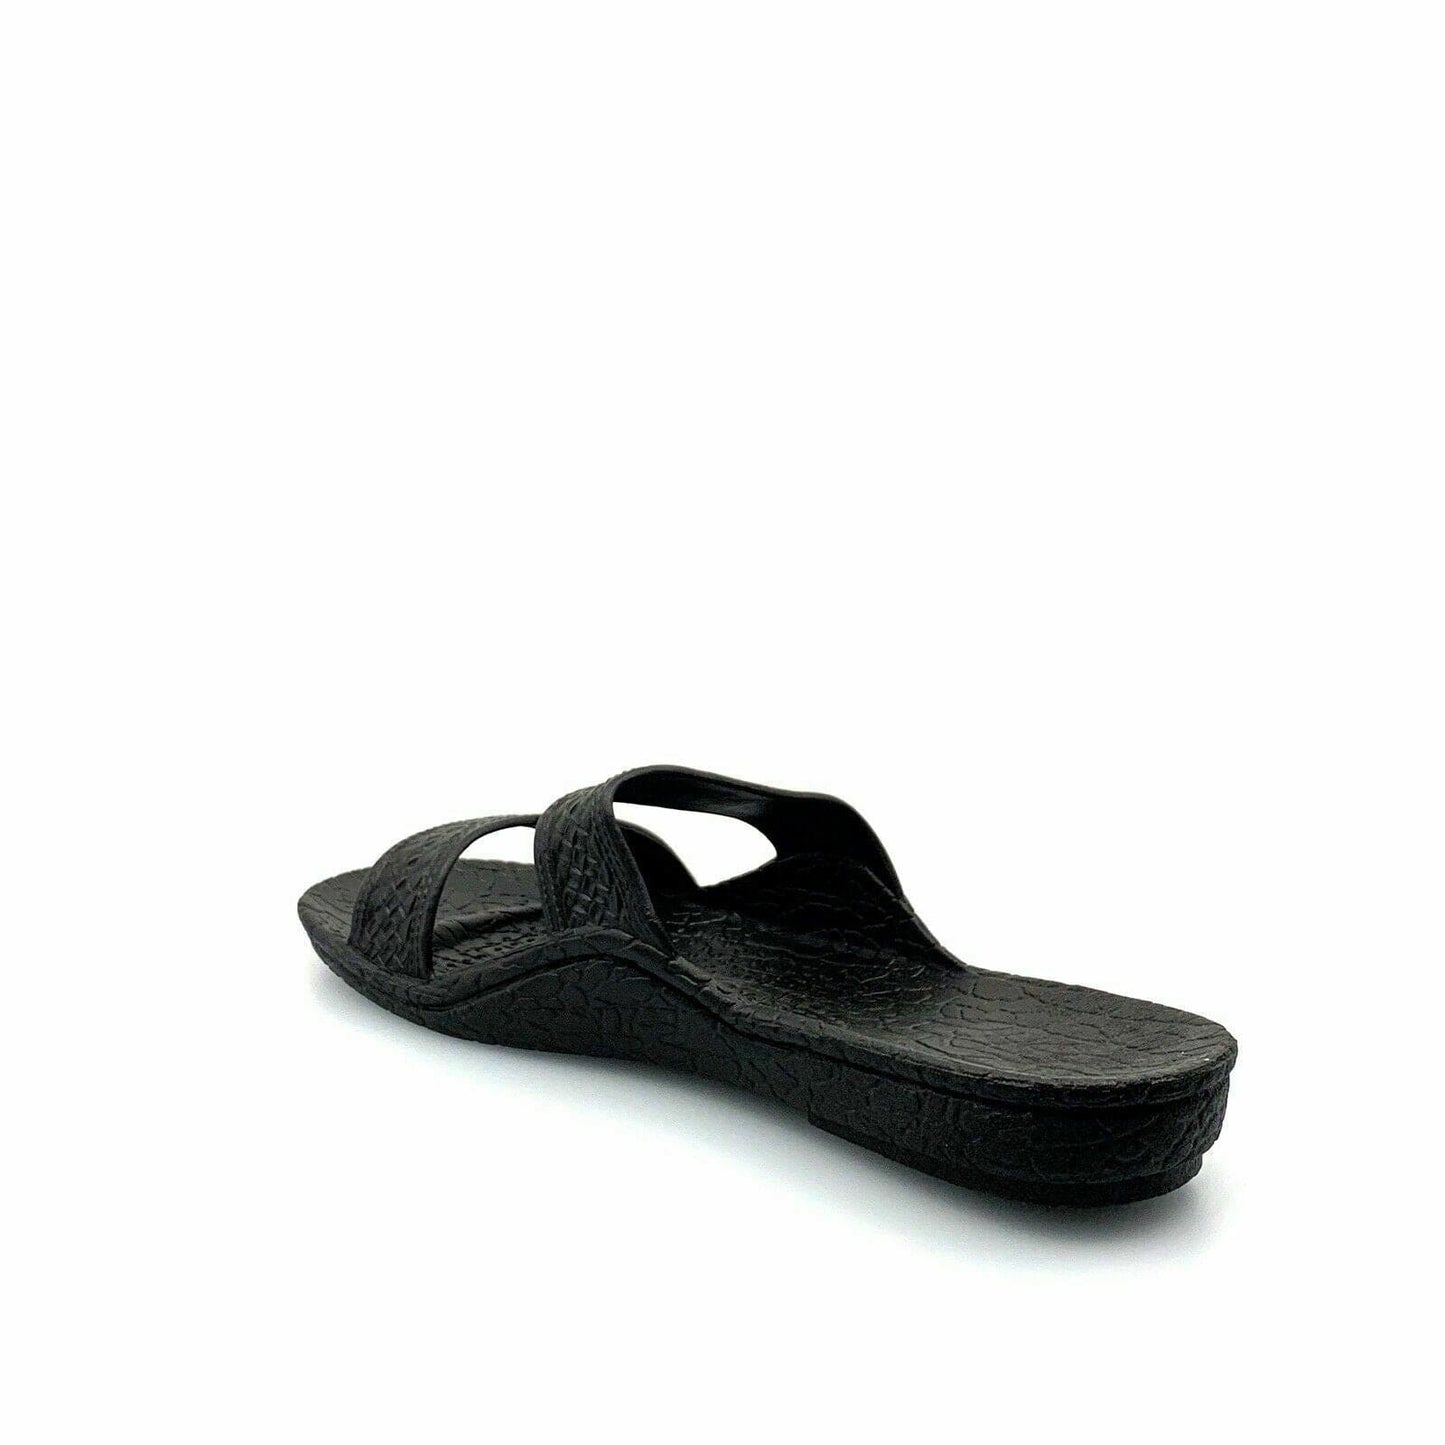 Pali Hawaii Size 13 Black Rubber Sandals Classic Jandals Slides Shower Shoes